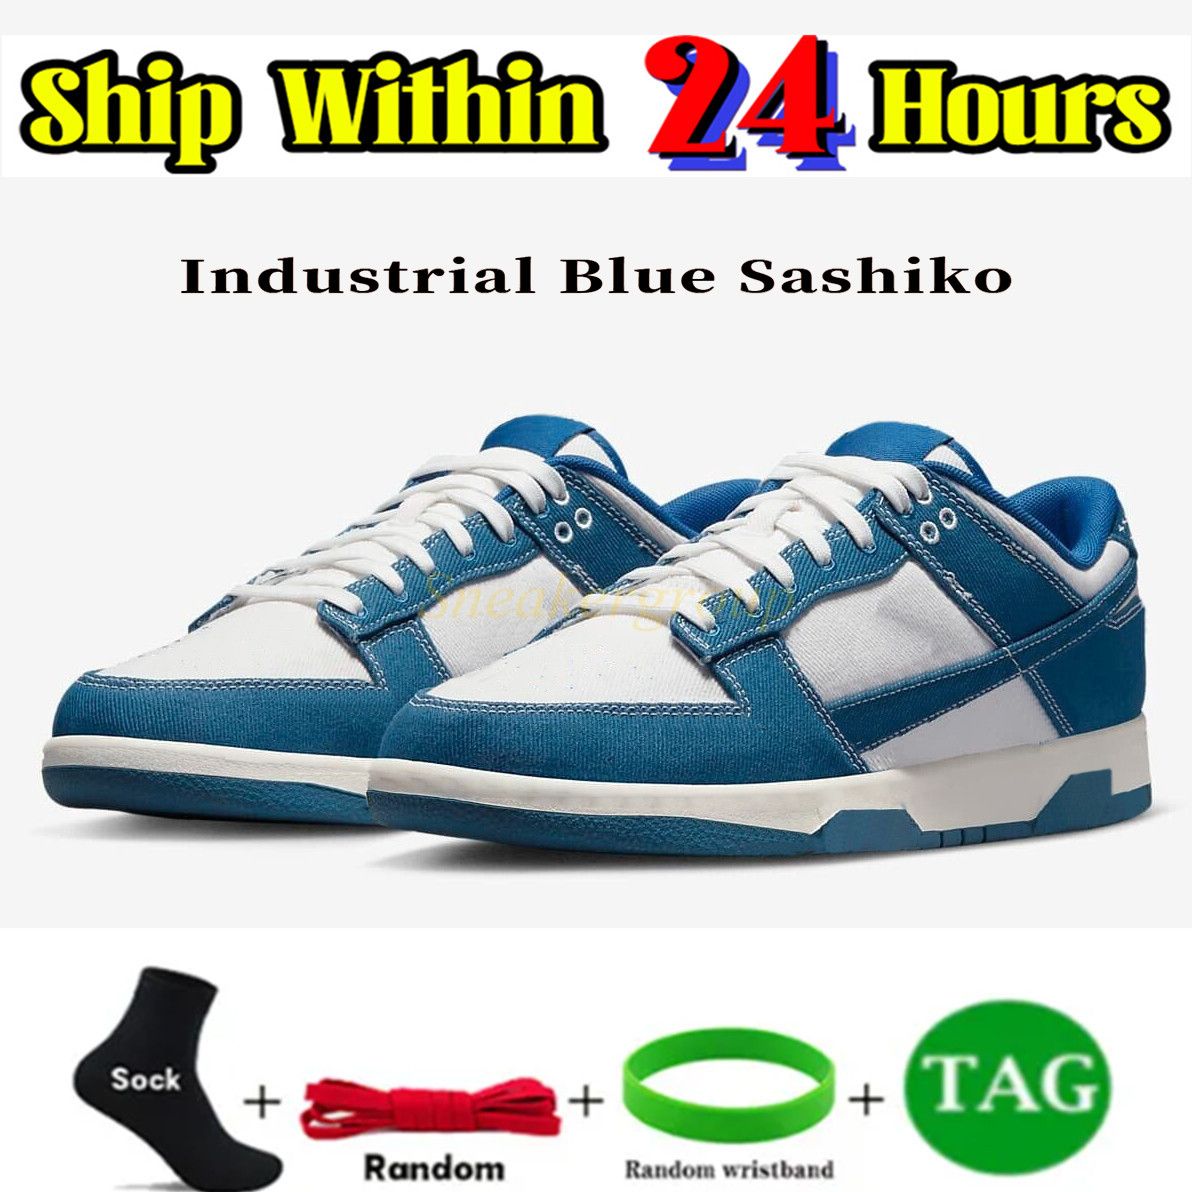 05 Industrial Blue Sashiko